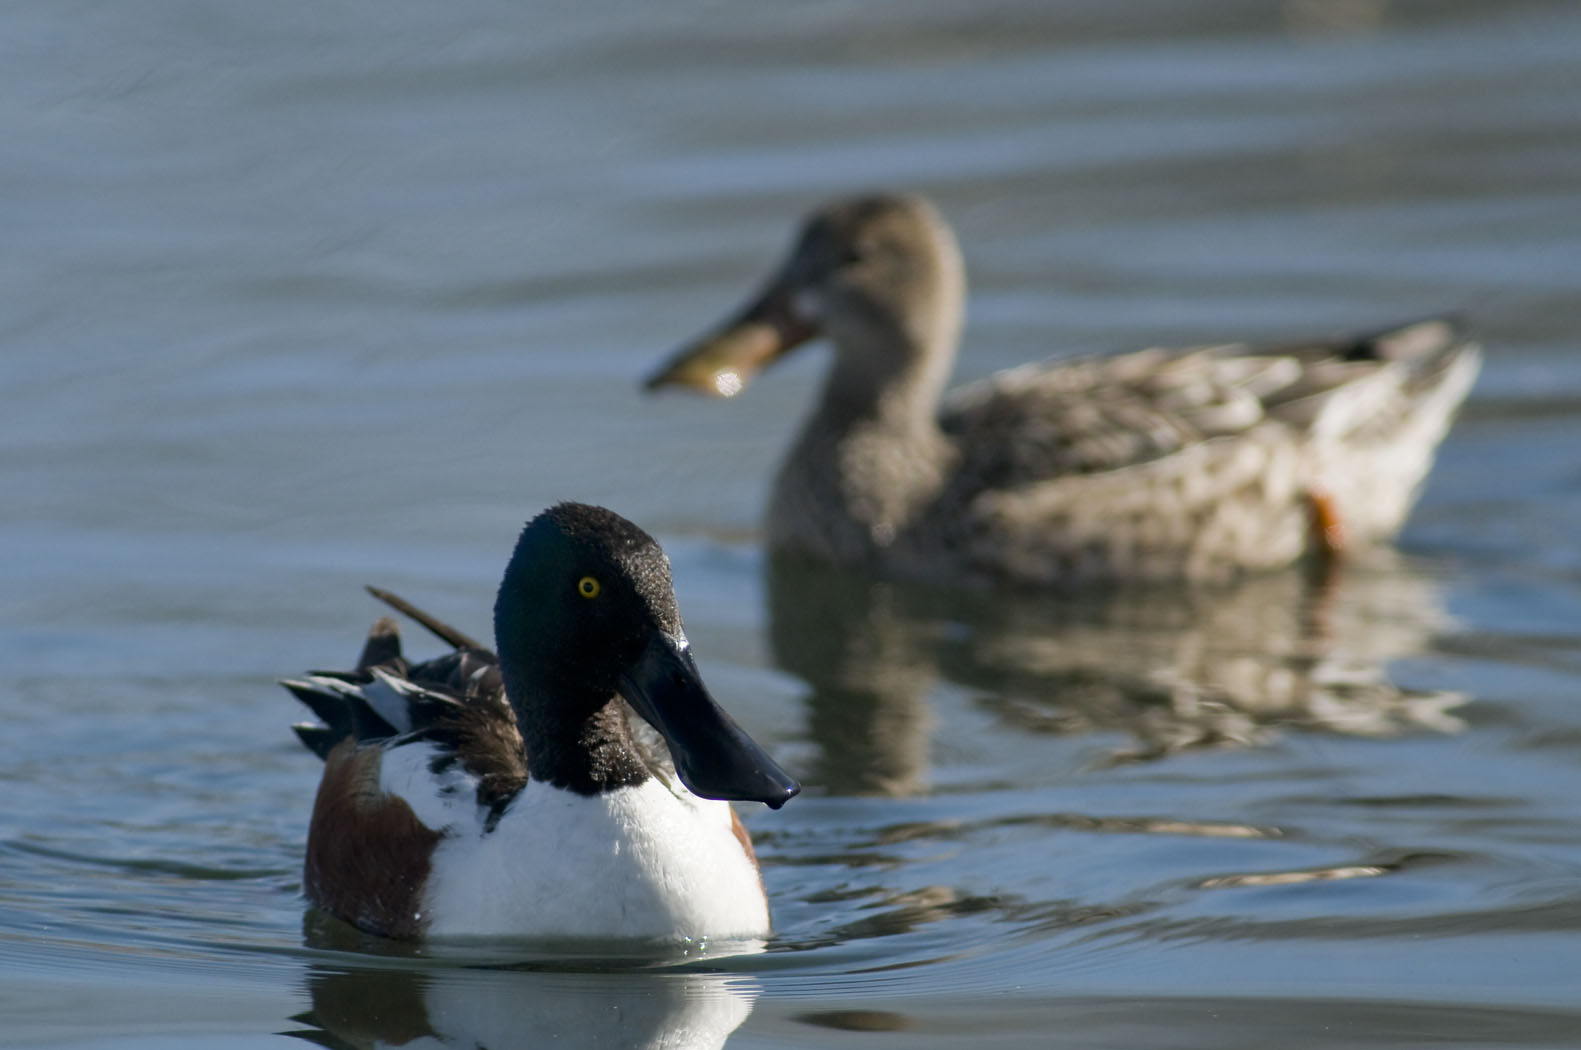 two mallards swim in the pond, one has orange beak